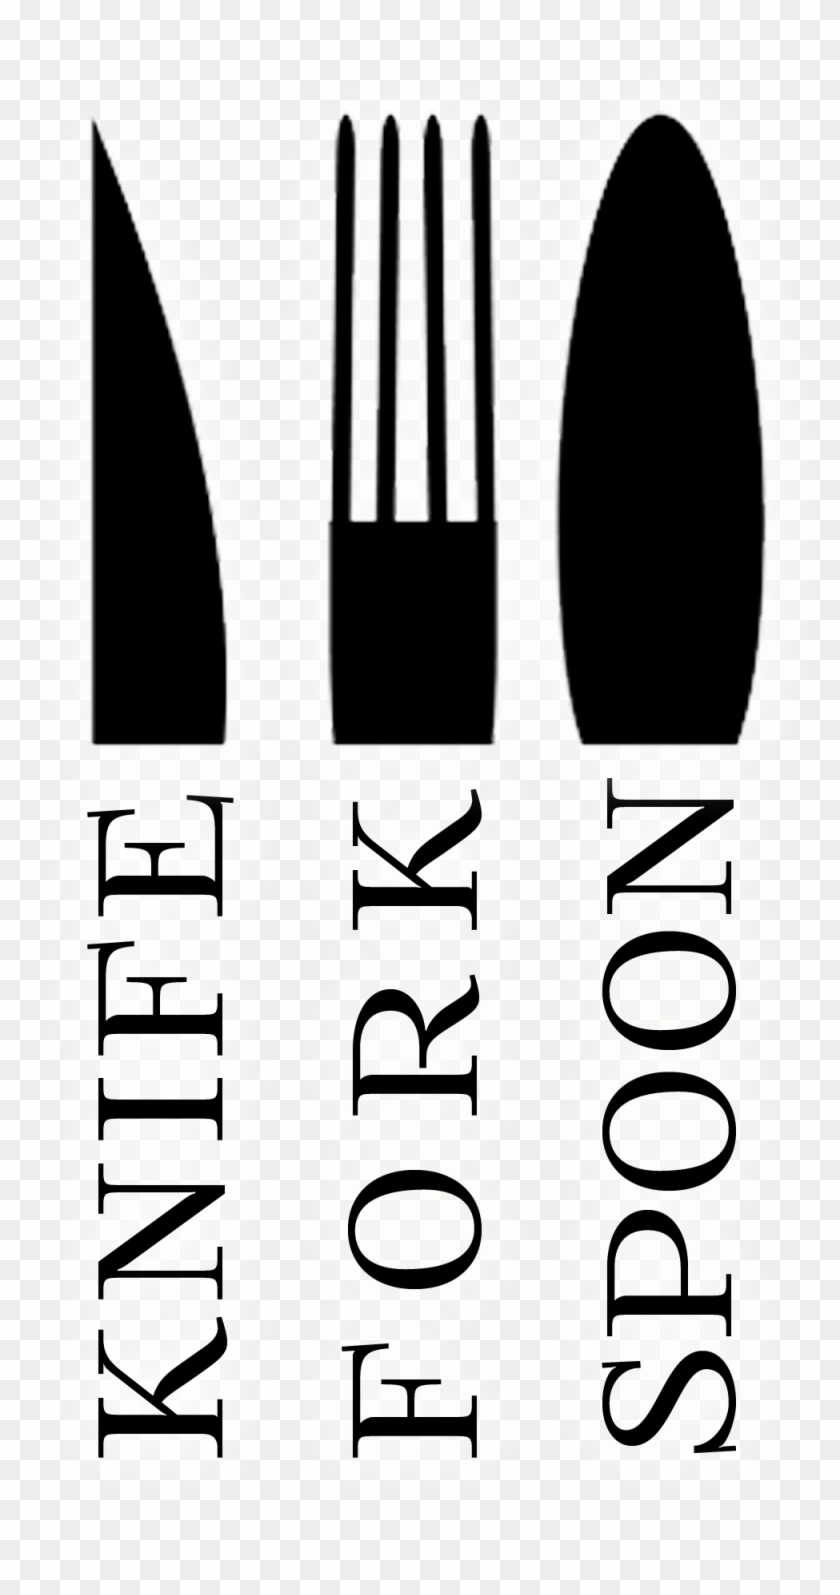 Knife Fork & Spoon - Knife Fork Spoon Clipart